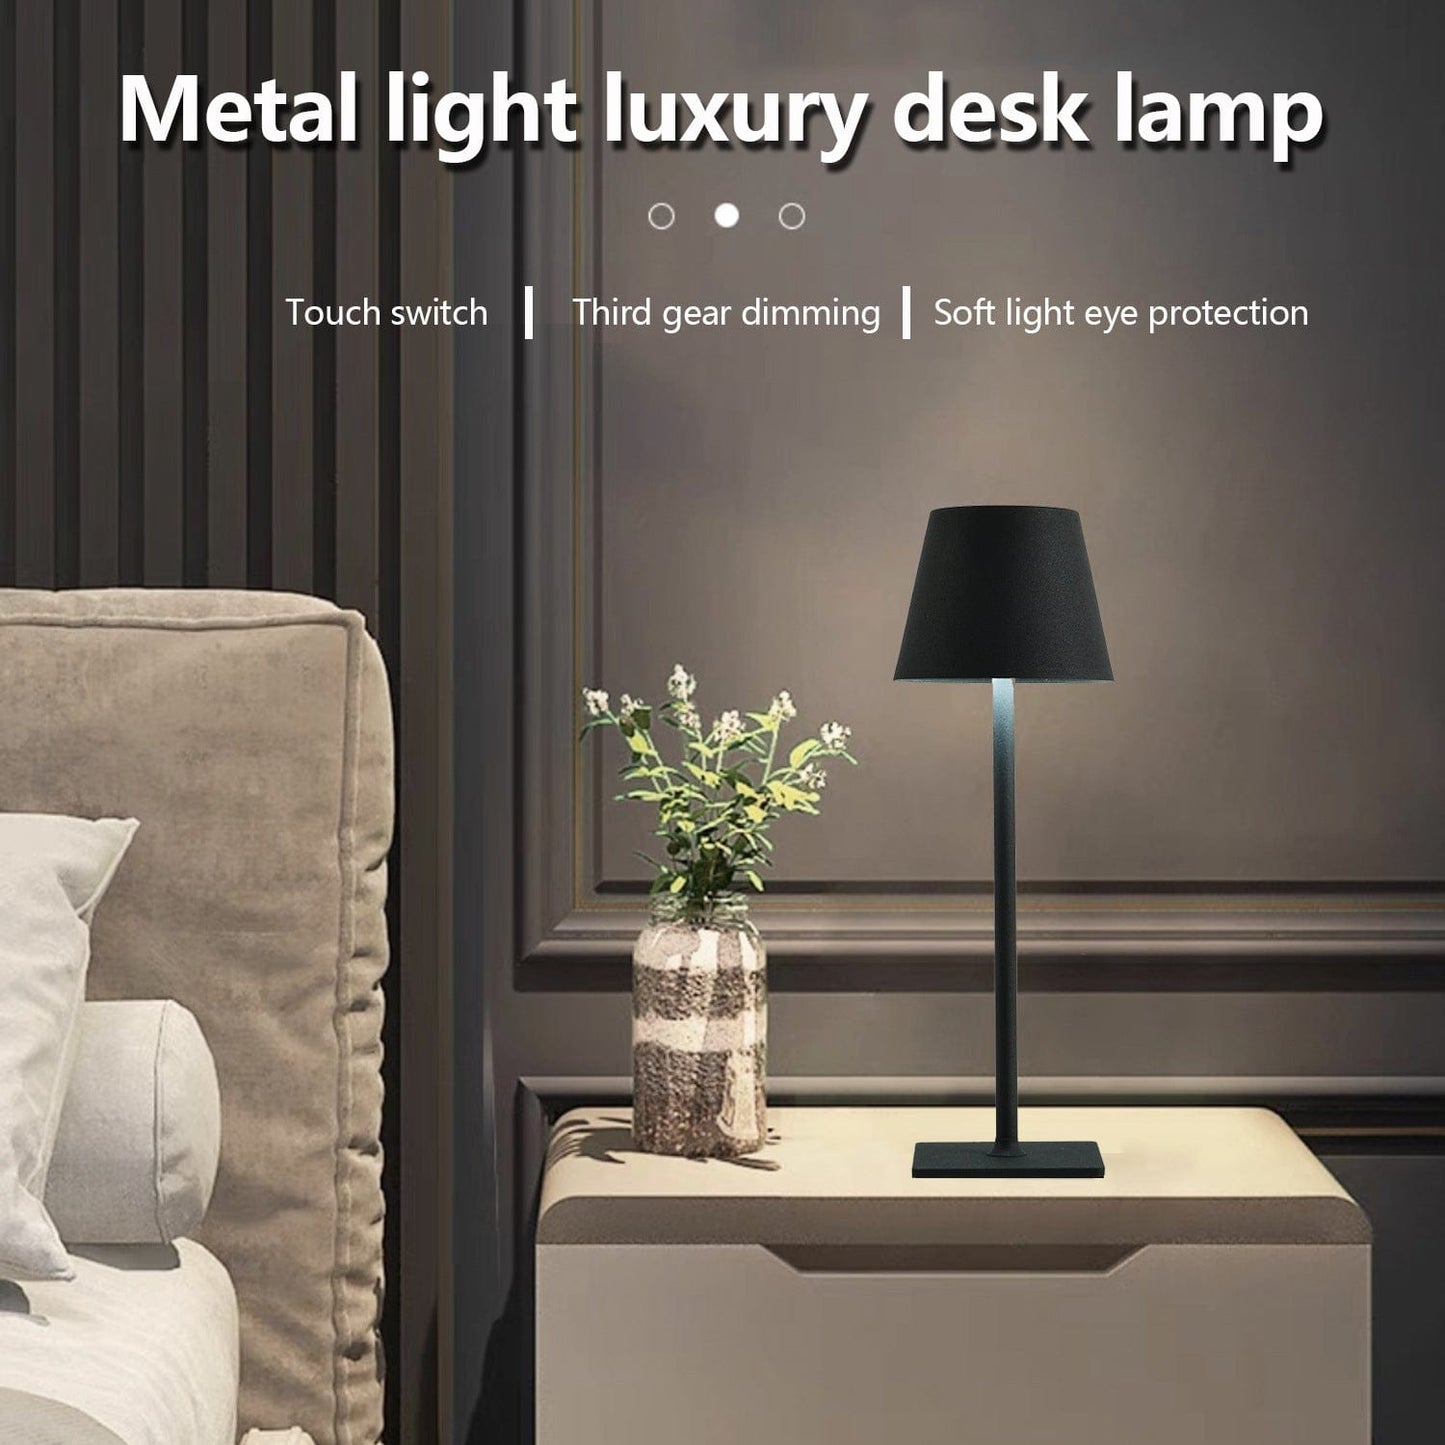 Simple desk lamp, cross-border e-commerce model, decorative desk lamp, charging table lamp, metal texture mood lamp, creative desk lamp